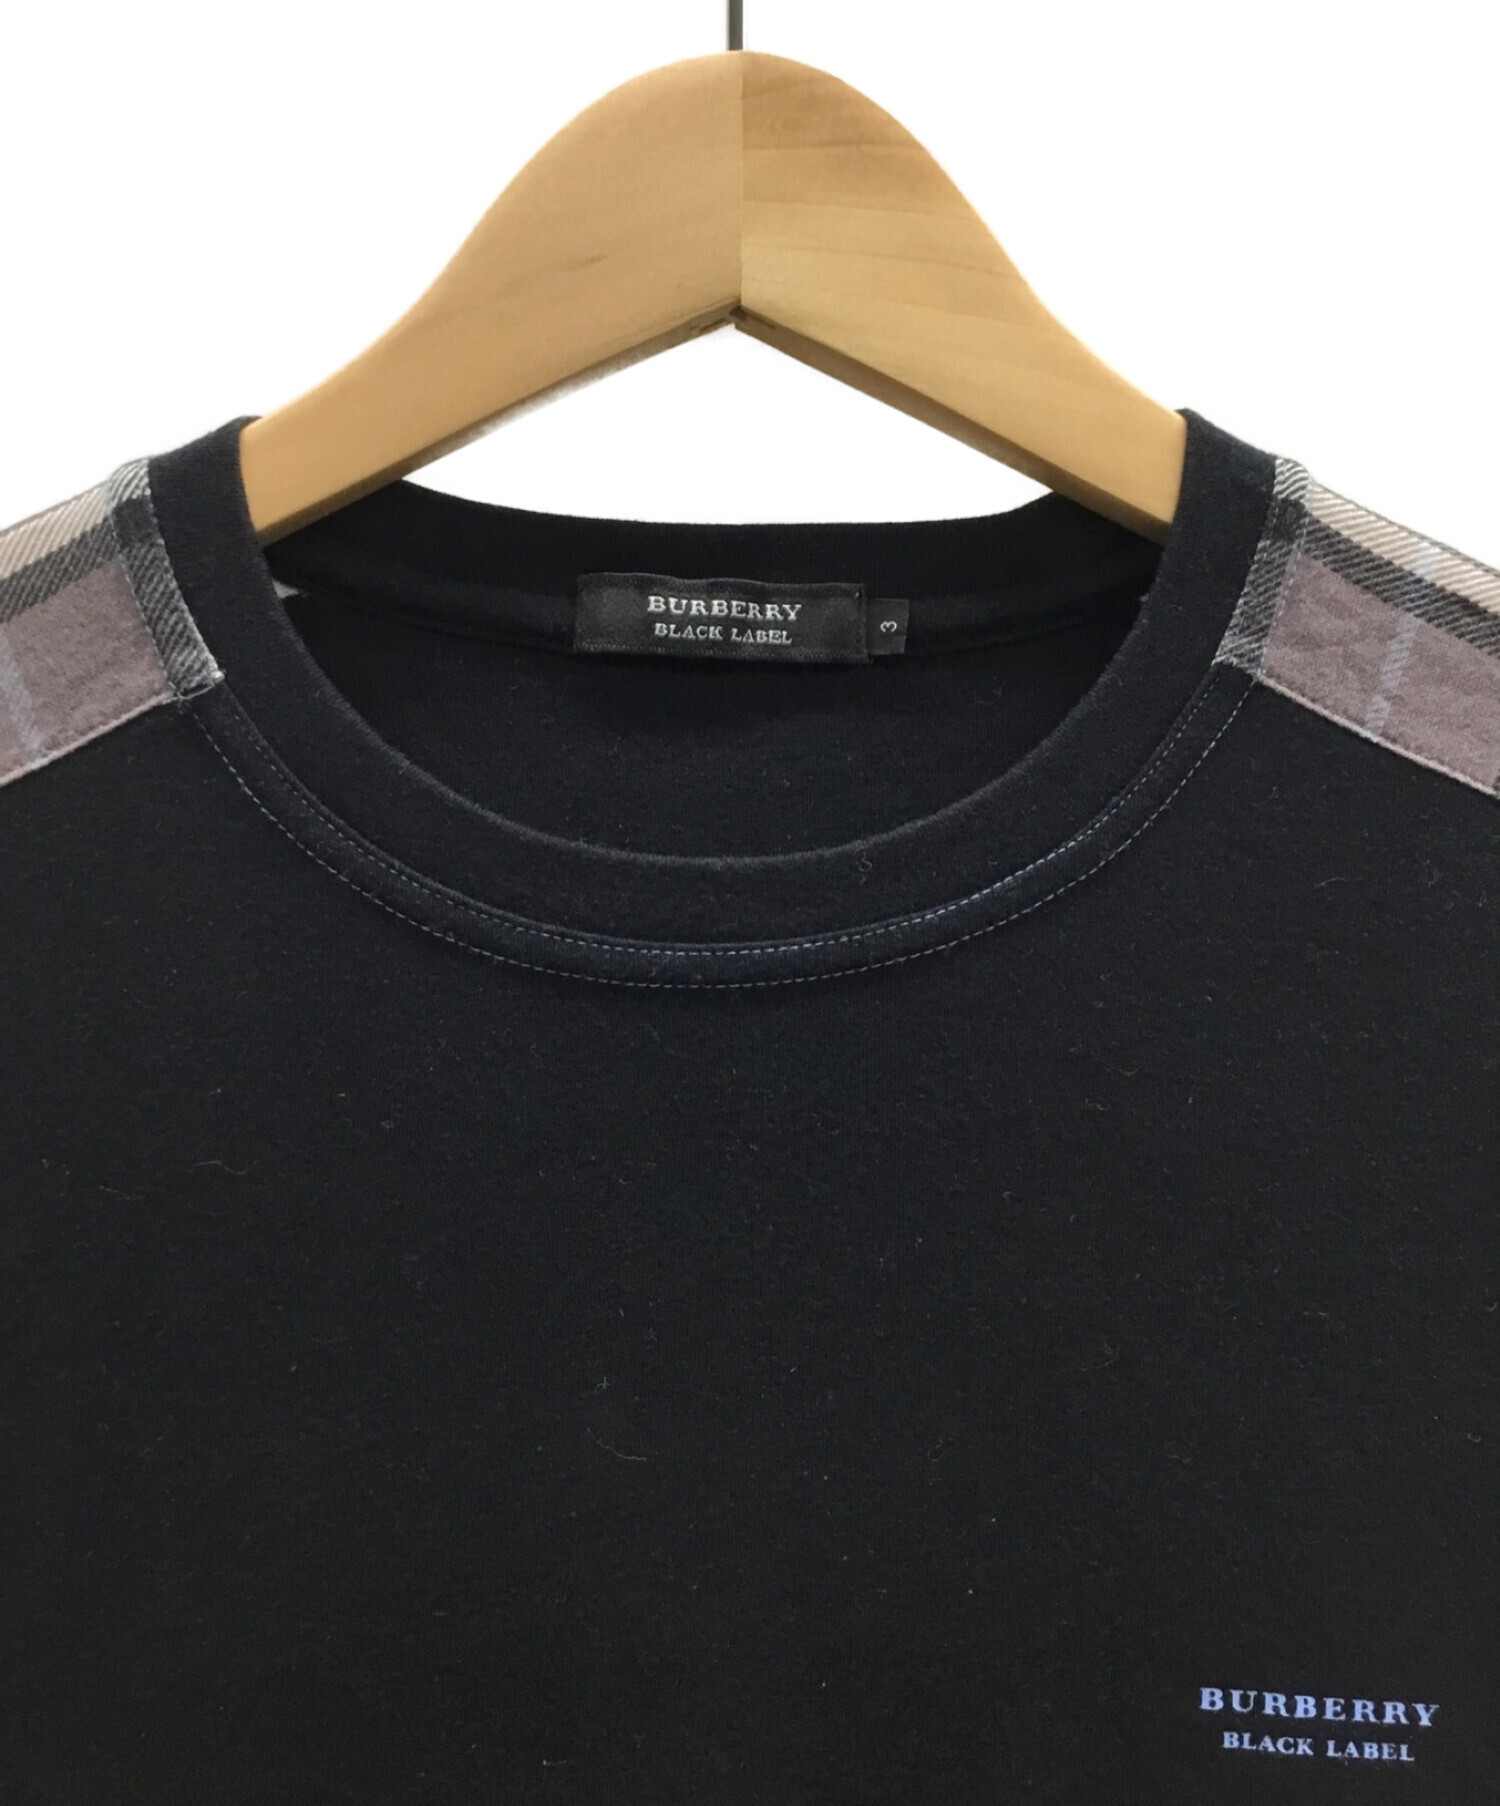 Burberry Black Label(バーバリーブラックレーベル) 半袖Tシャツ 